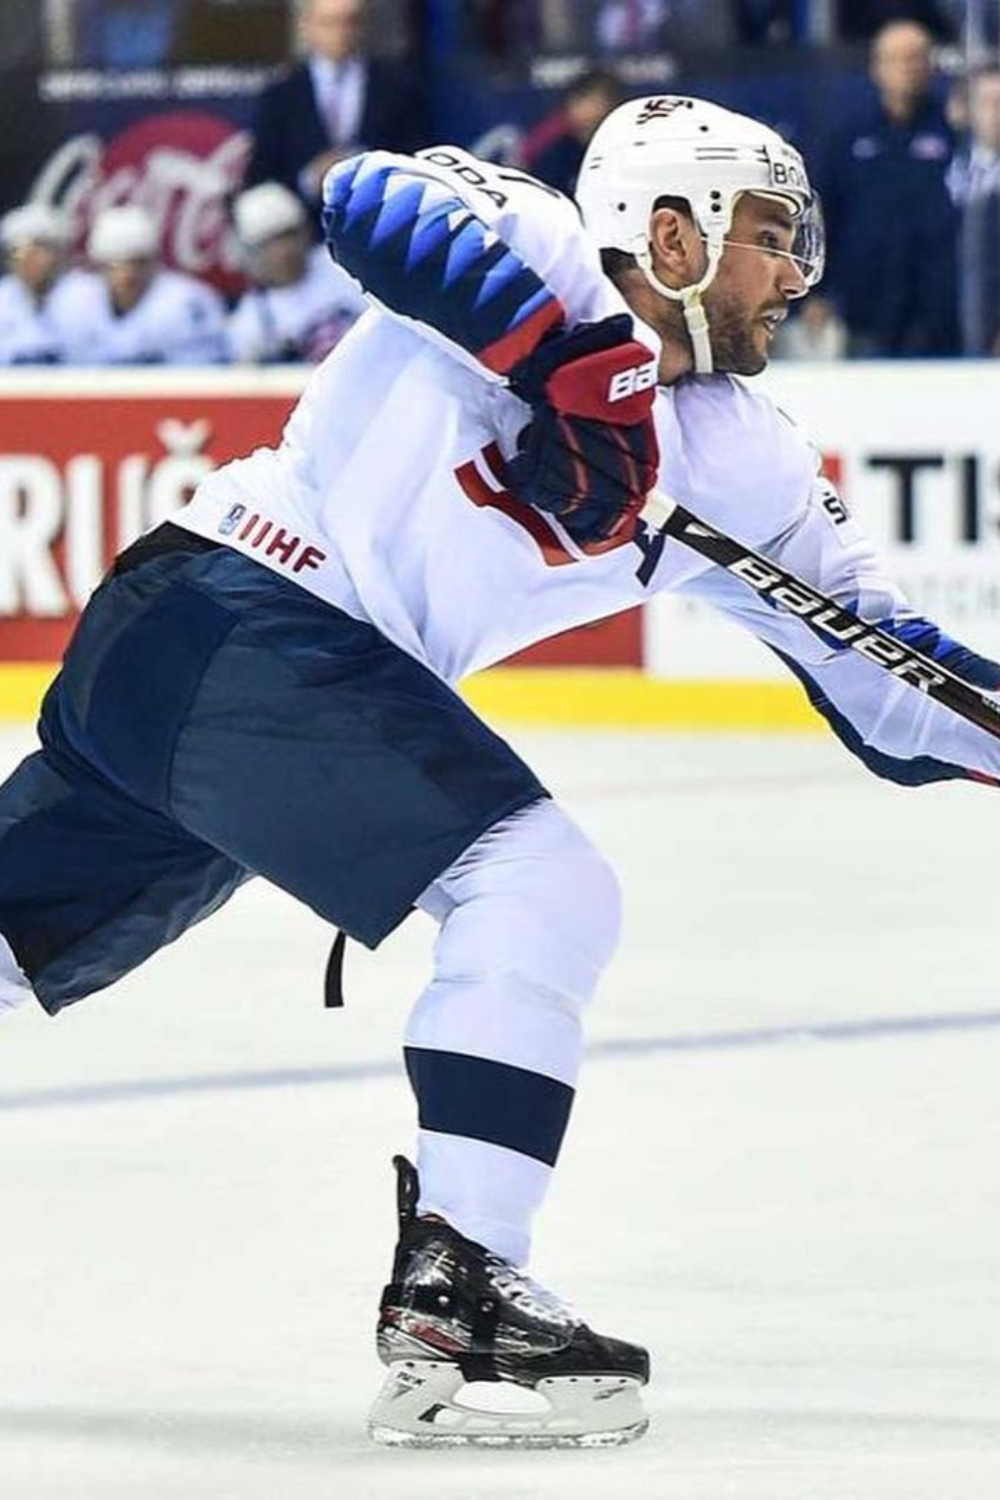 Alec Martinez, A Professional Ice Hockey Defenseman